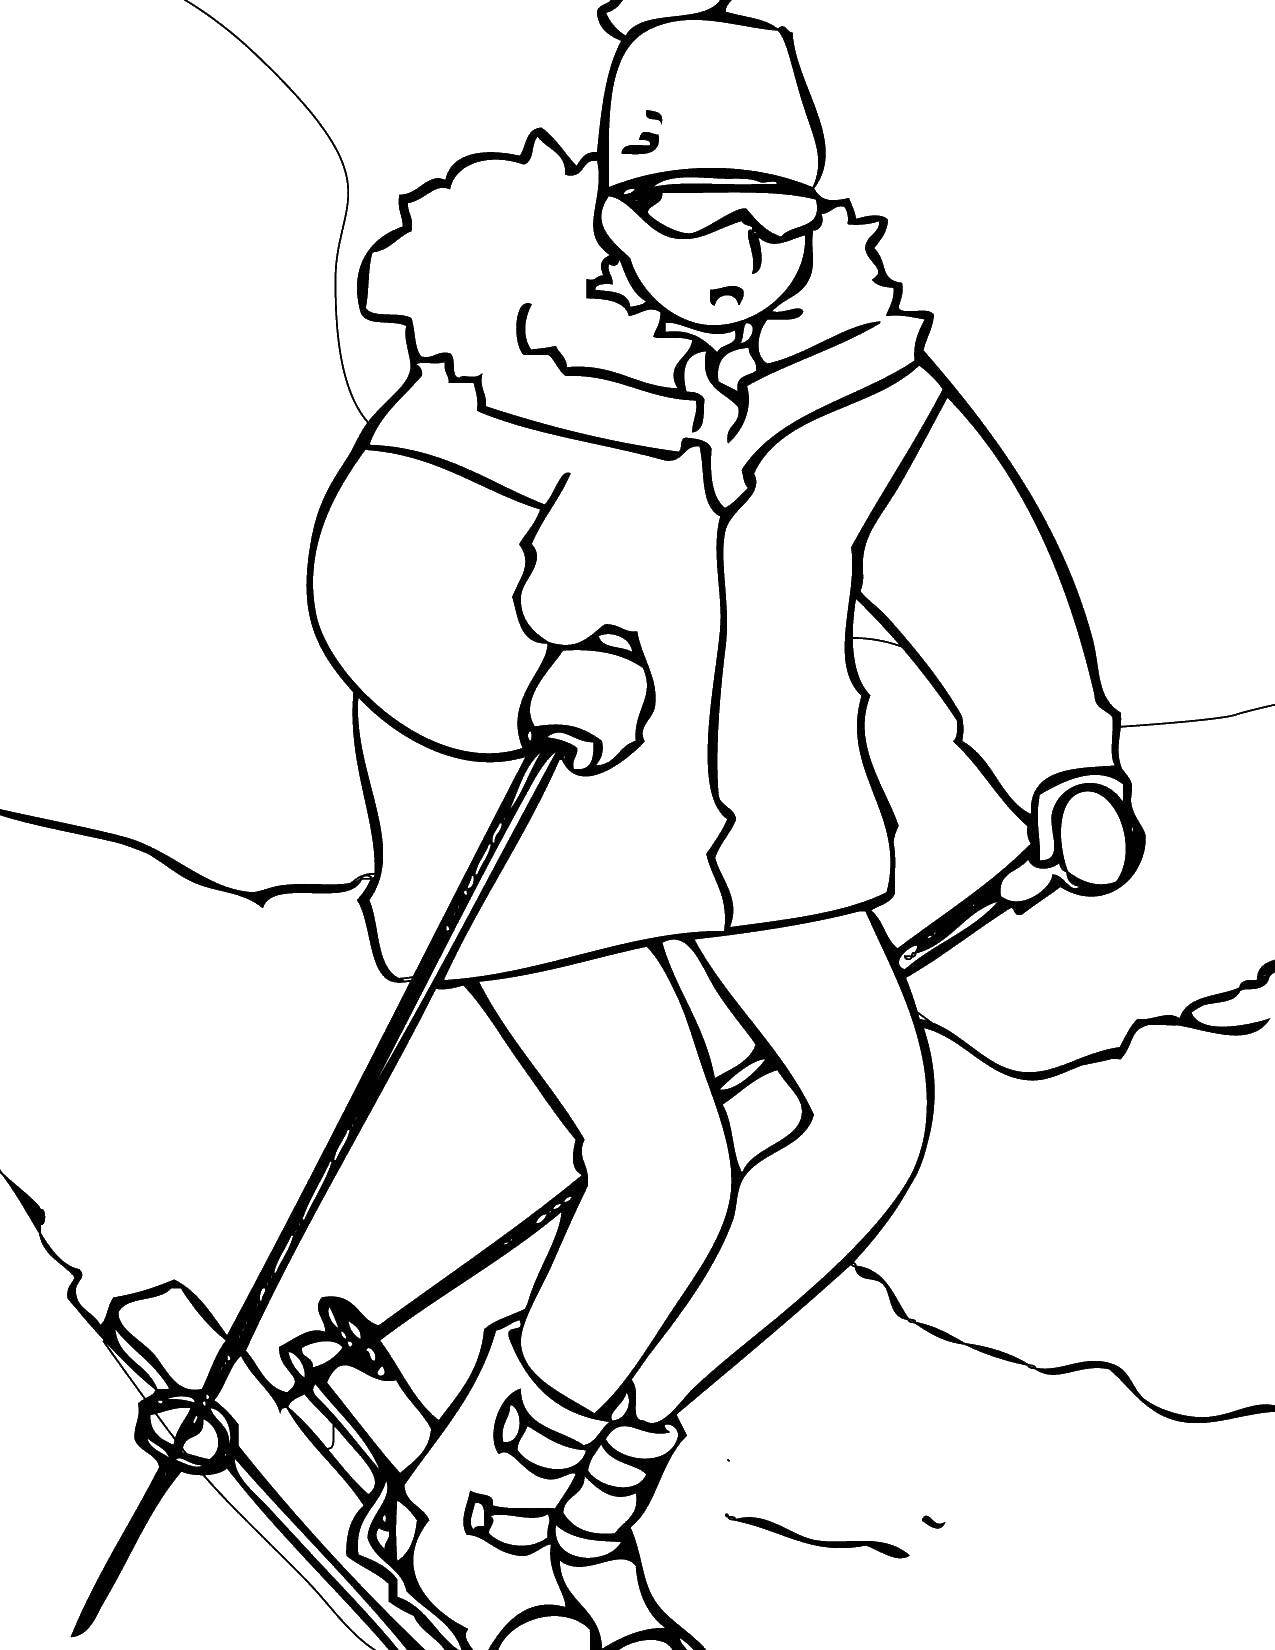 Coloring Ski season. Category Sports. Tags:  Sports, skiing.